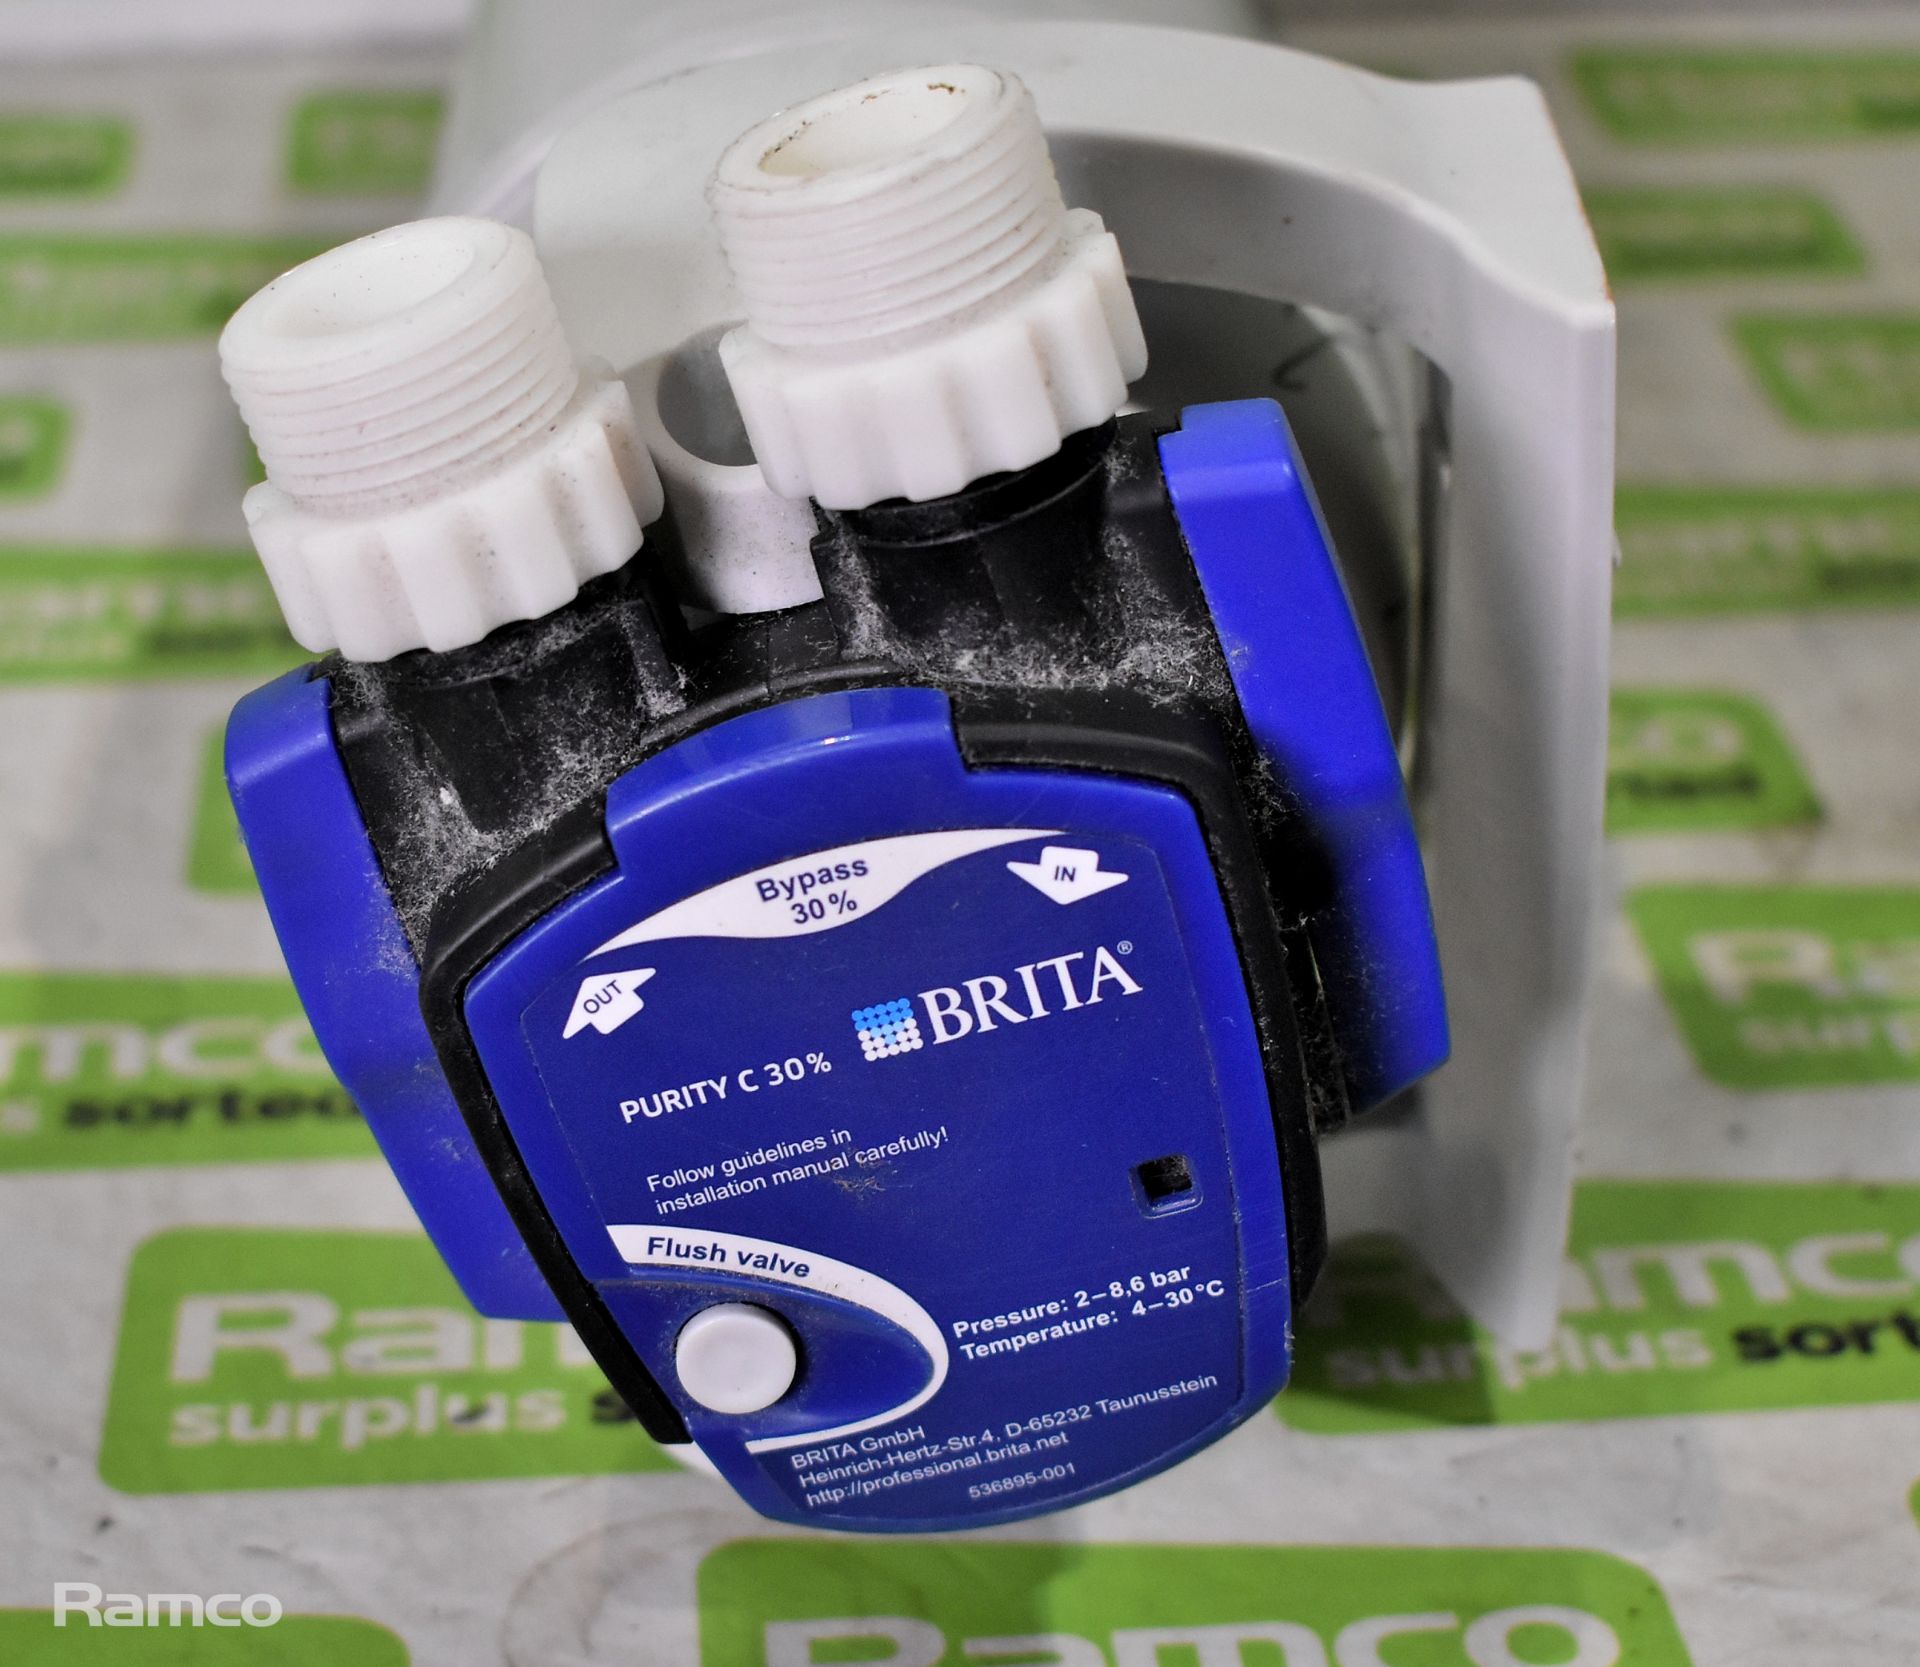 Brita Purity c300 Quell ST filter cartridge - Image 3 of 3